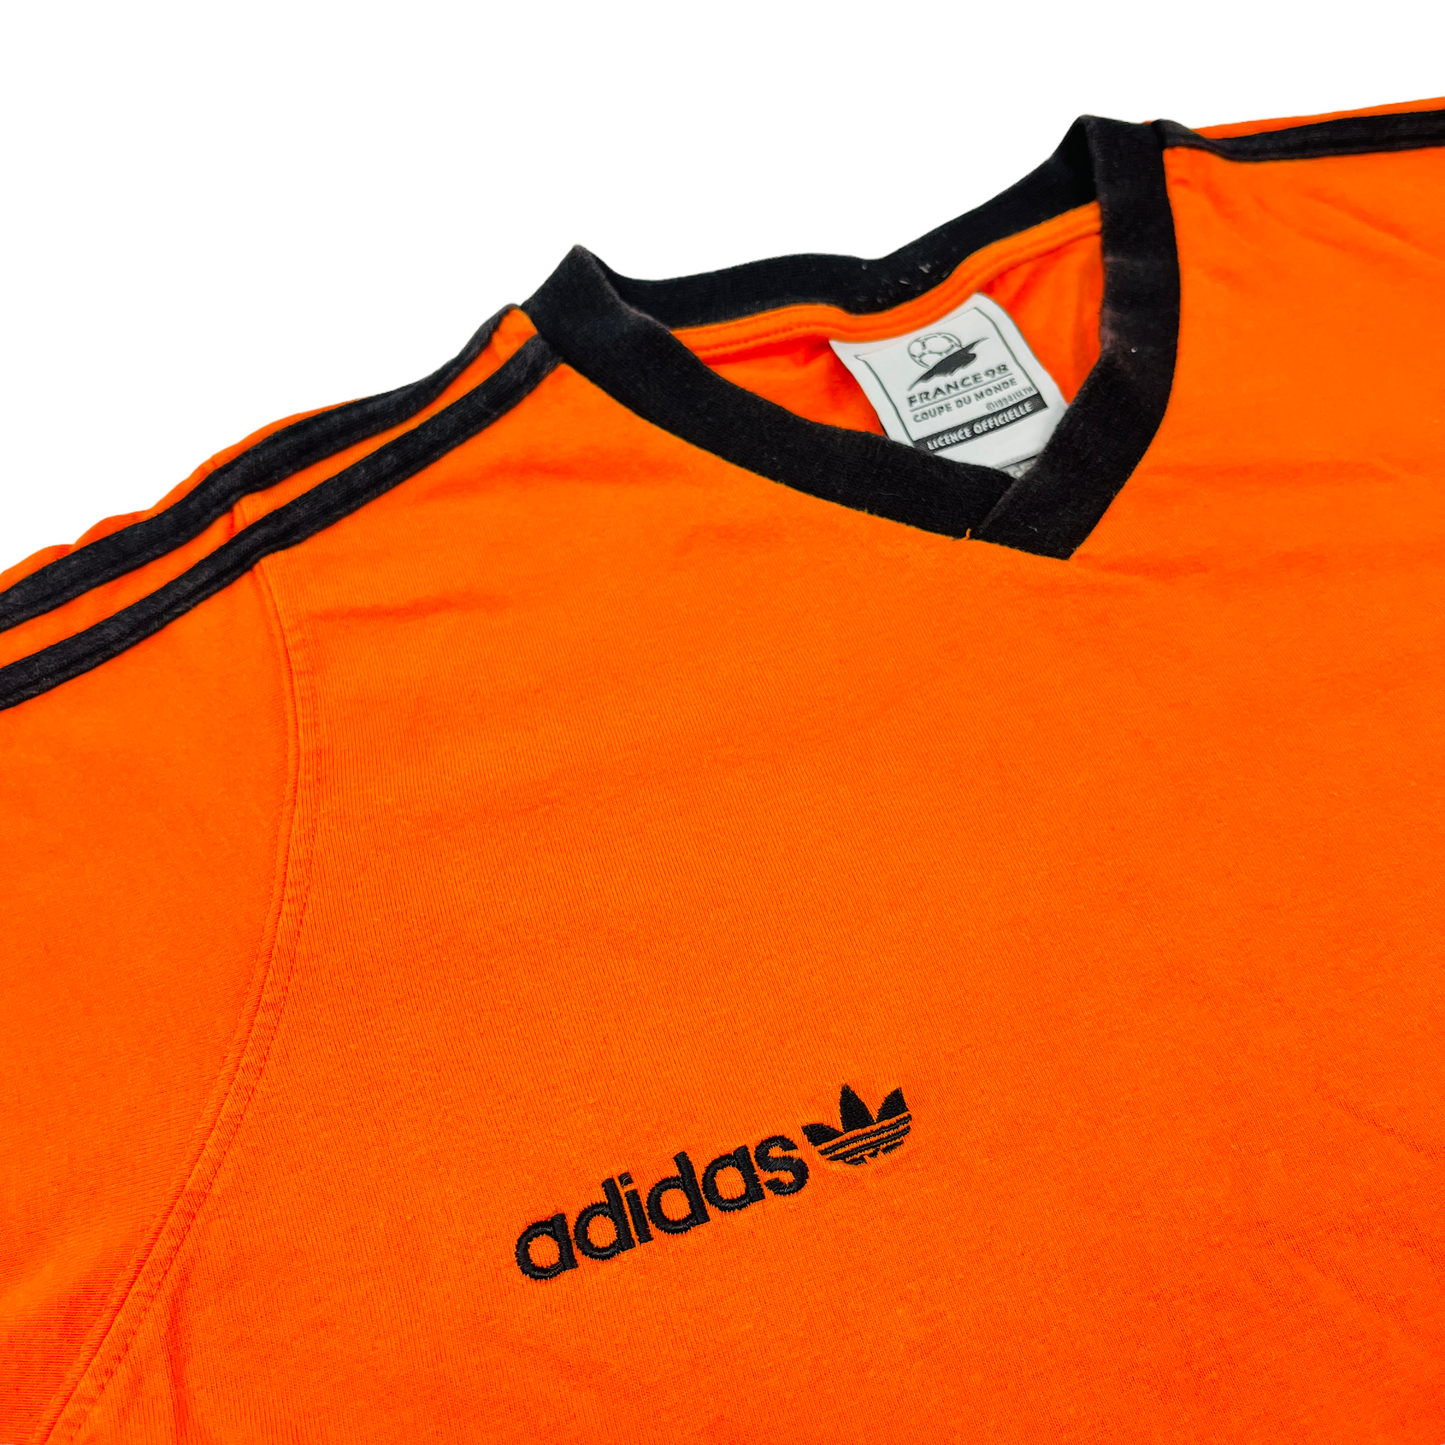 01449 Adidas Dutch National Team 1998 Retro Jersey